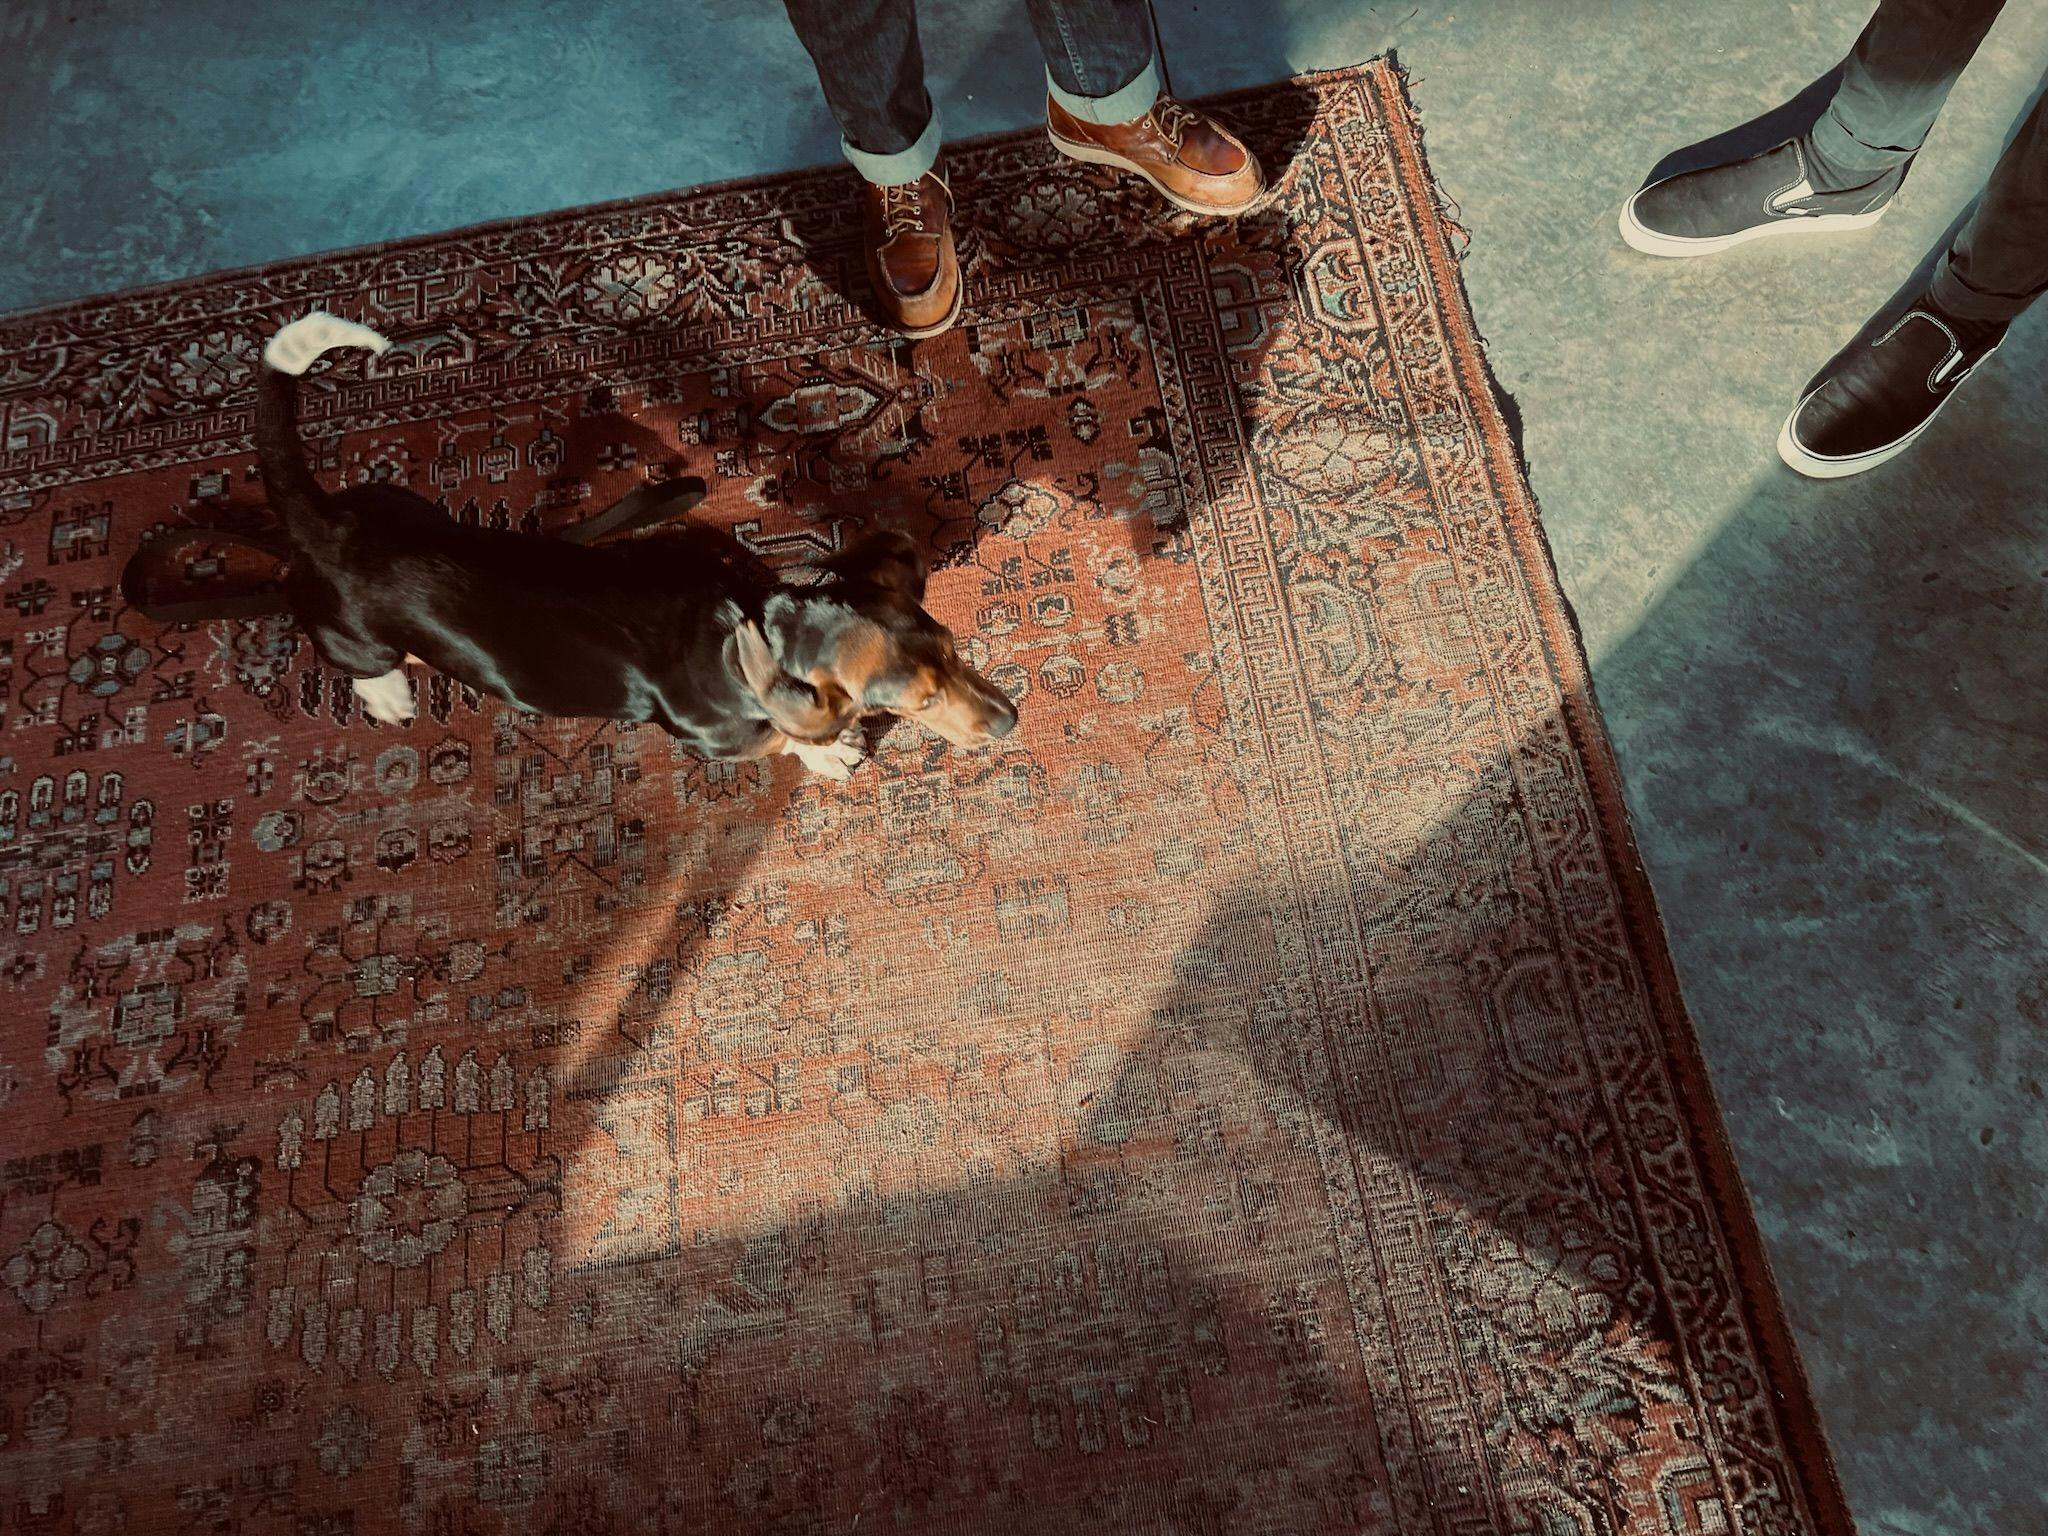 basset hound on vintage rug